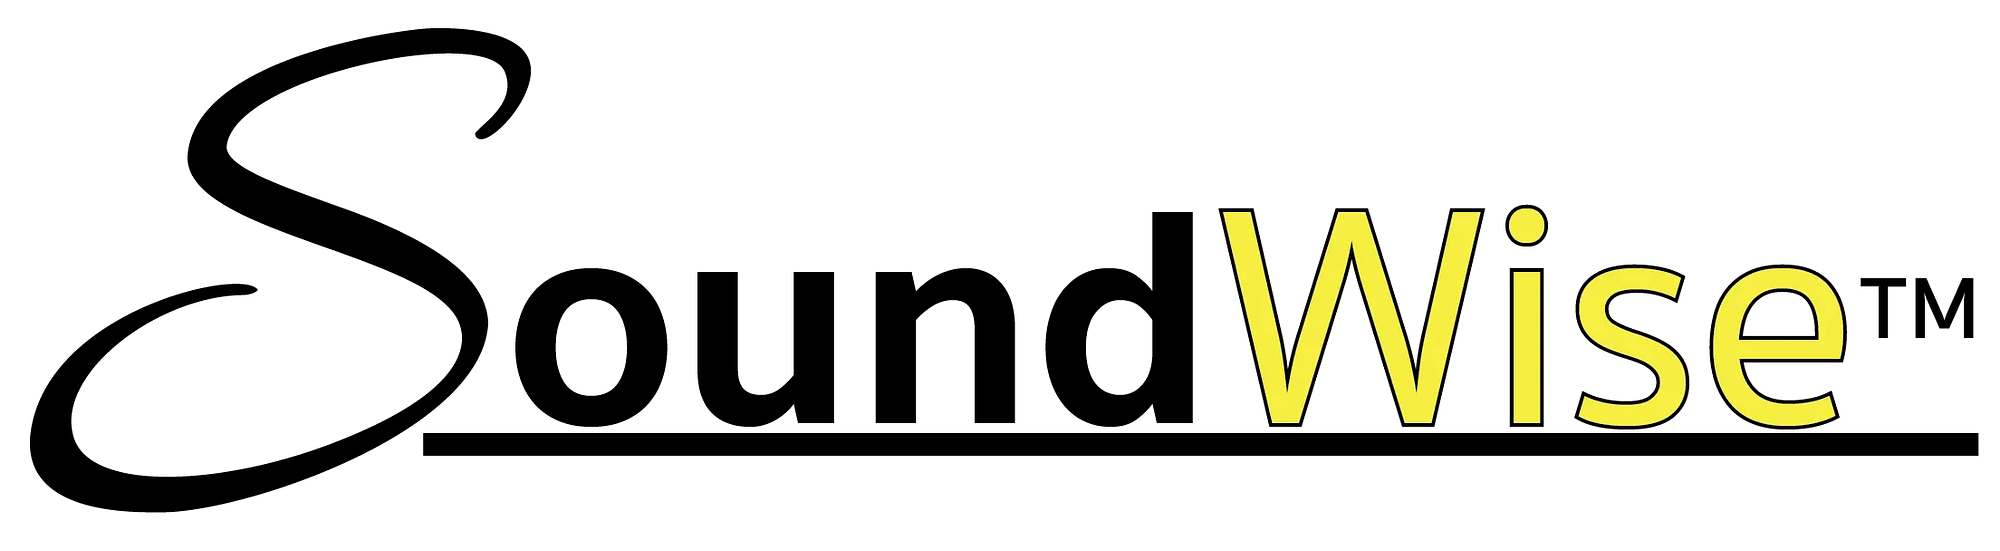 Wise-Brand-Logos_Soundwise-Yellow